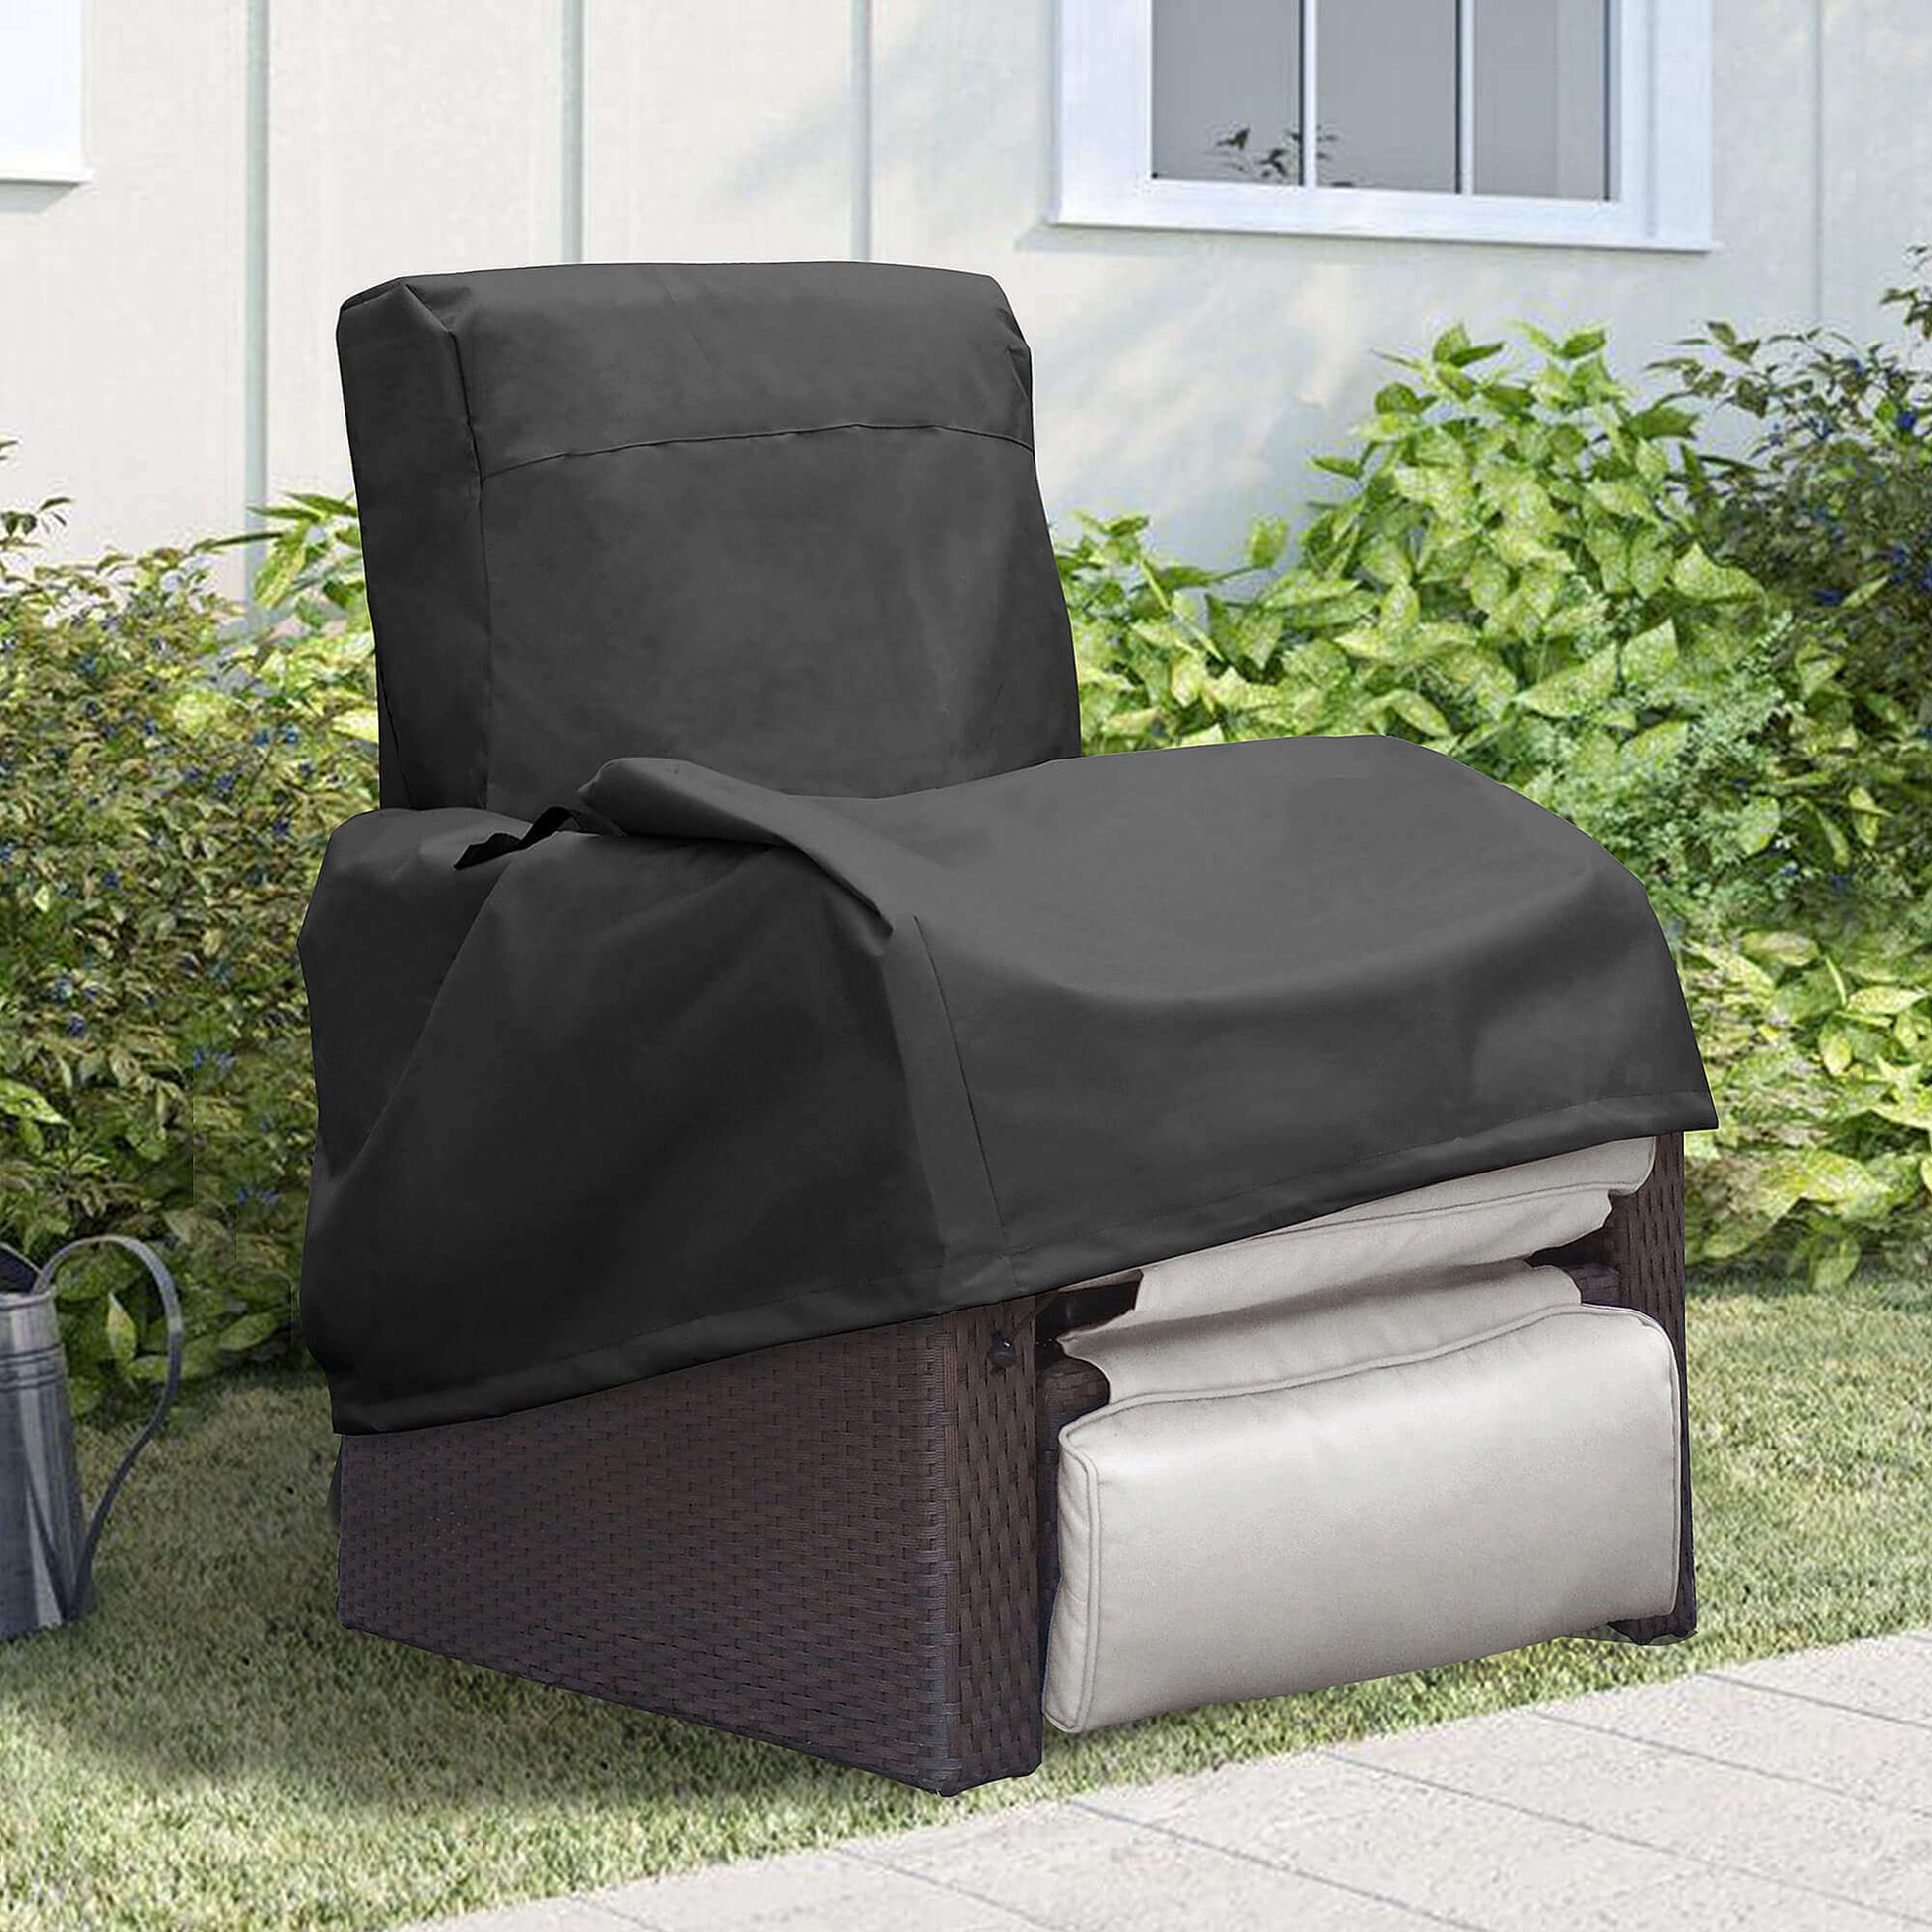 Seasonal Outdoor Patio Furniture Covers